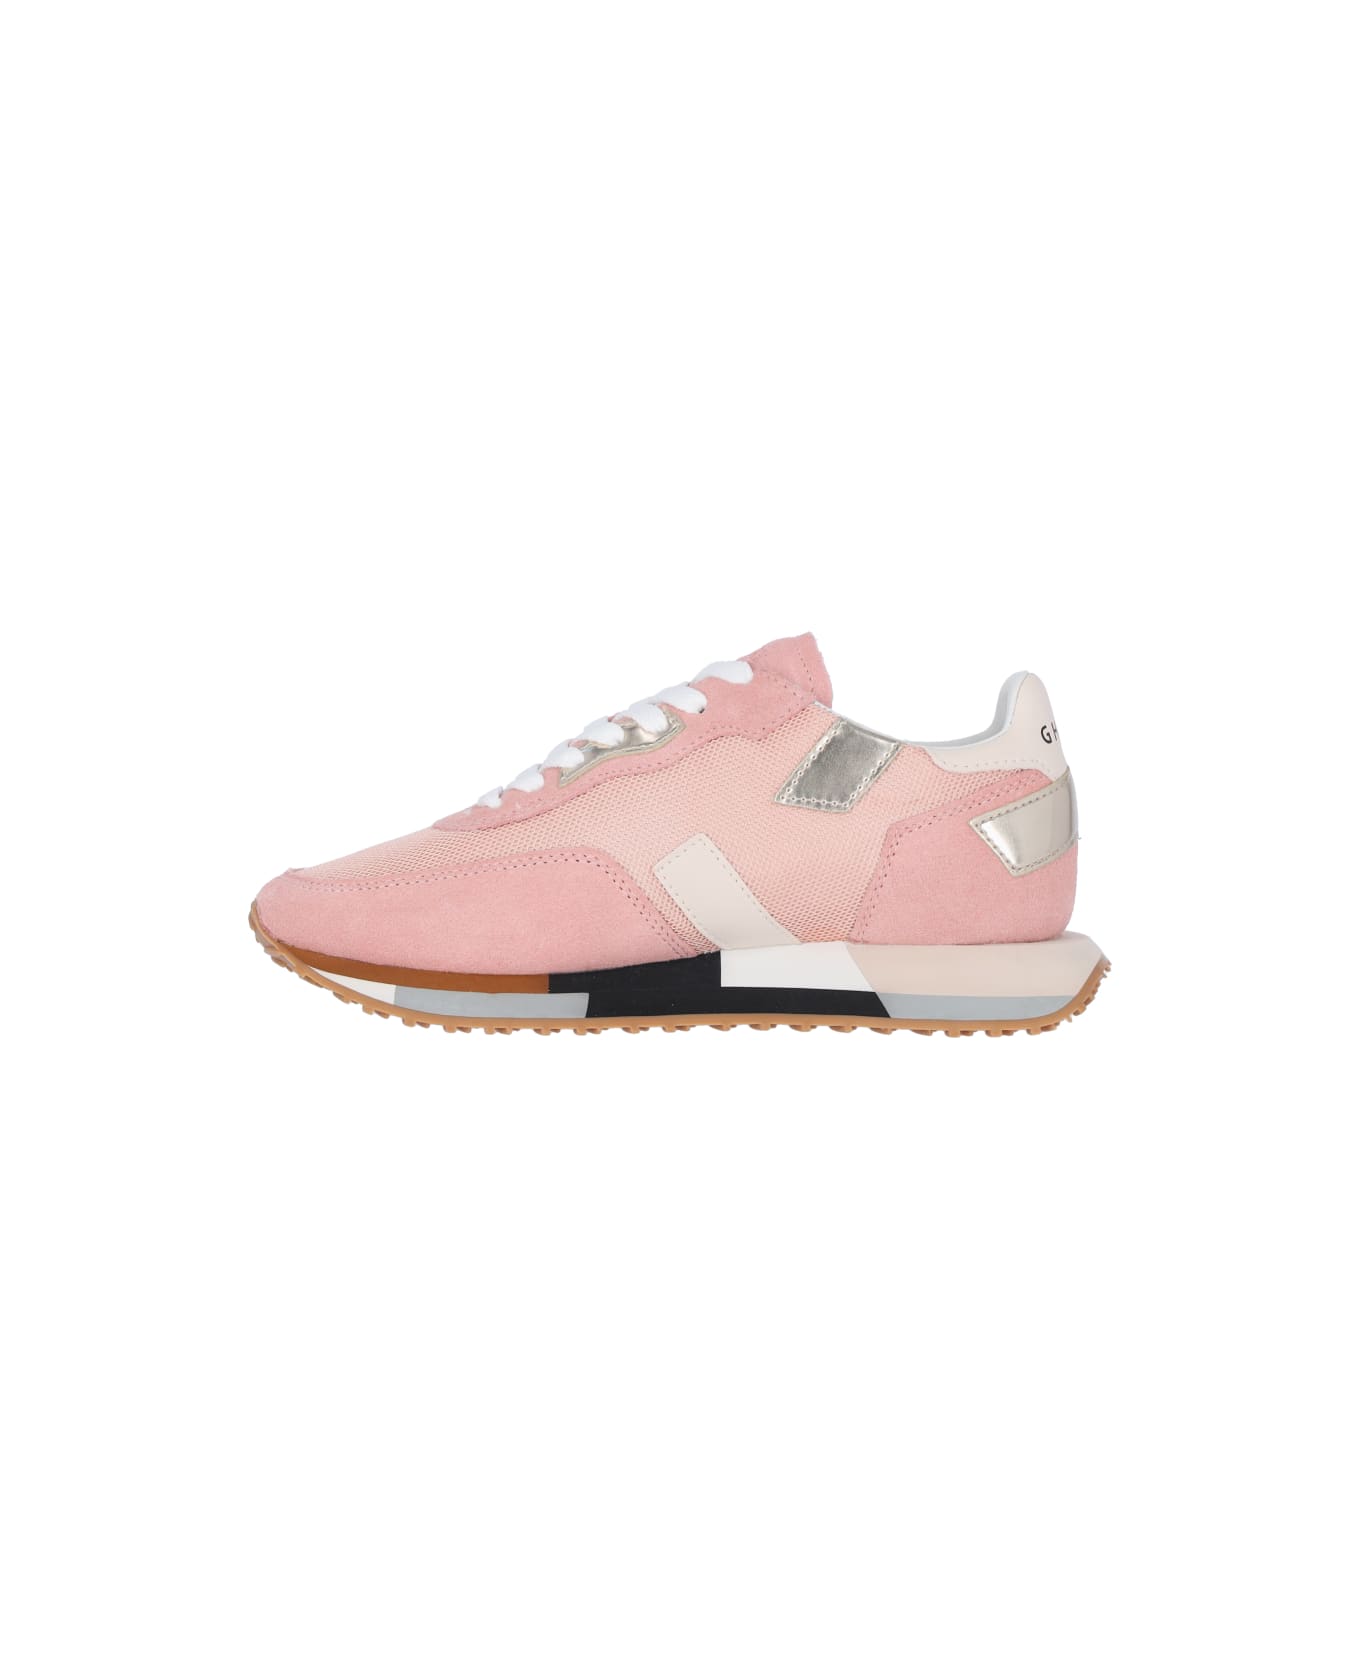 GHOUD "rush" Sneakers - Pink スニーカー